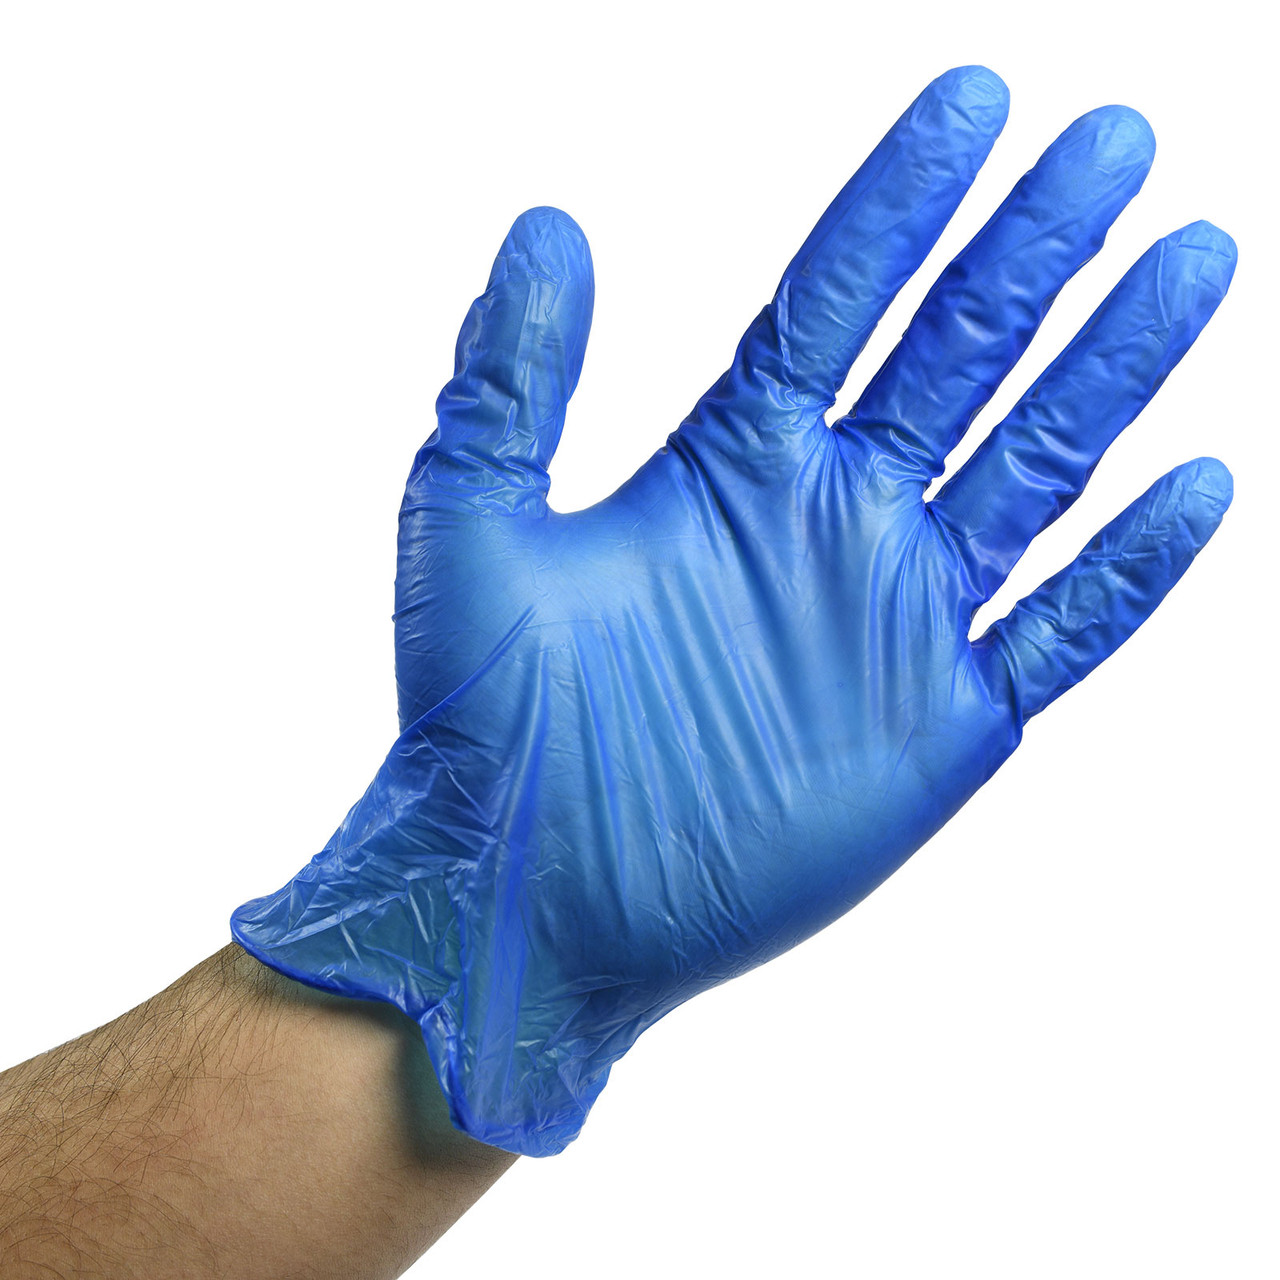 GLOVEWORKS Blue Synthetic Vinyl Disposable Gloves, 3 Mil, Medium